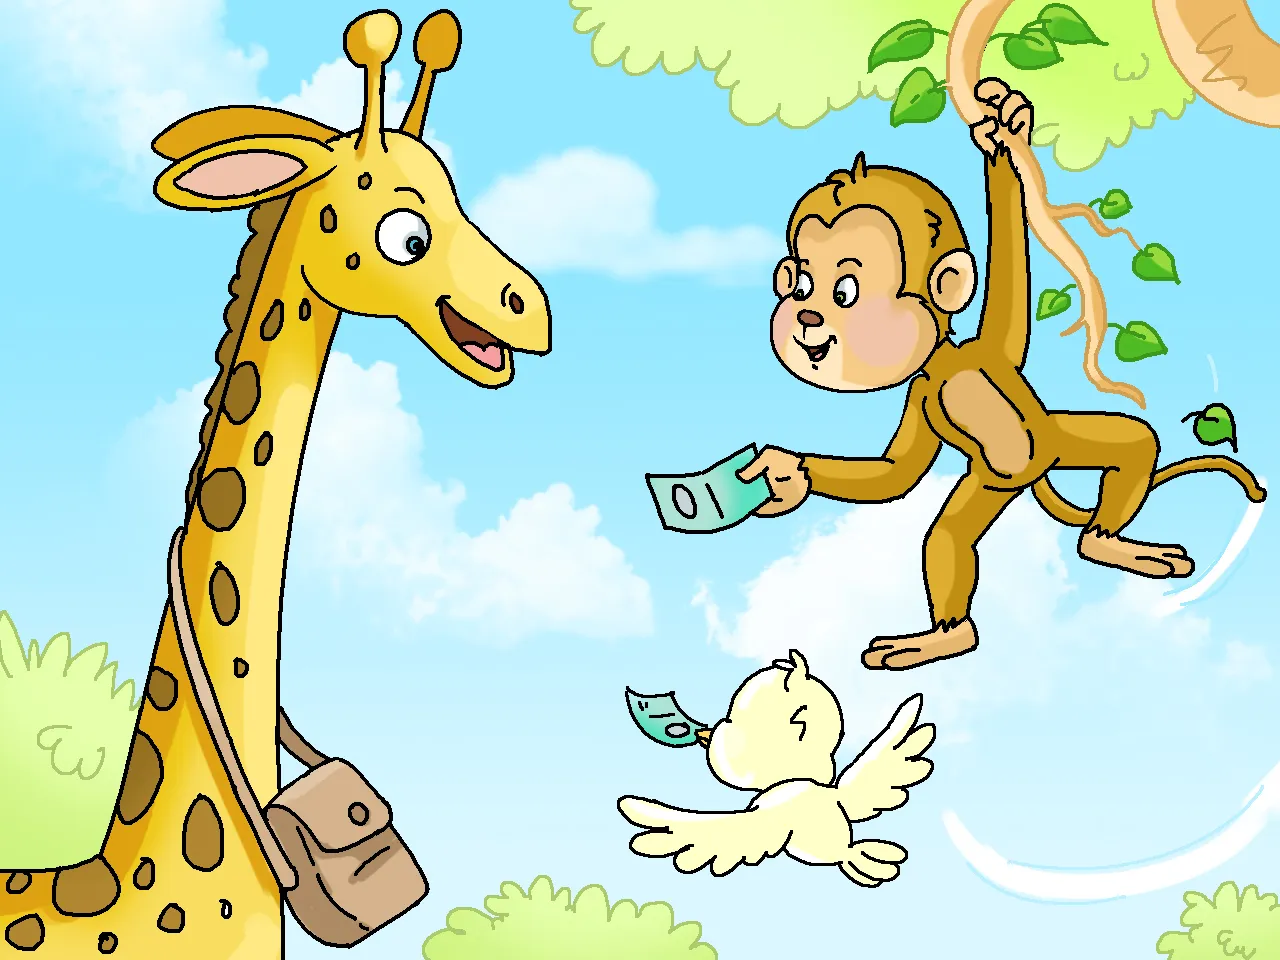 Monkey and giraffe